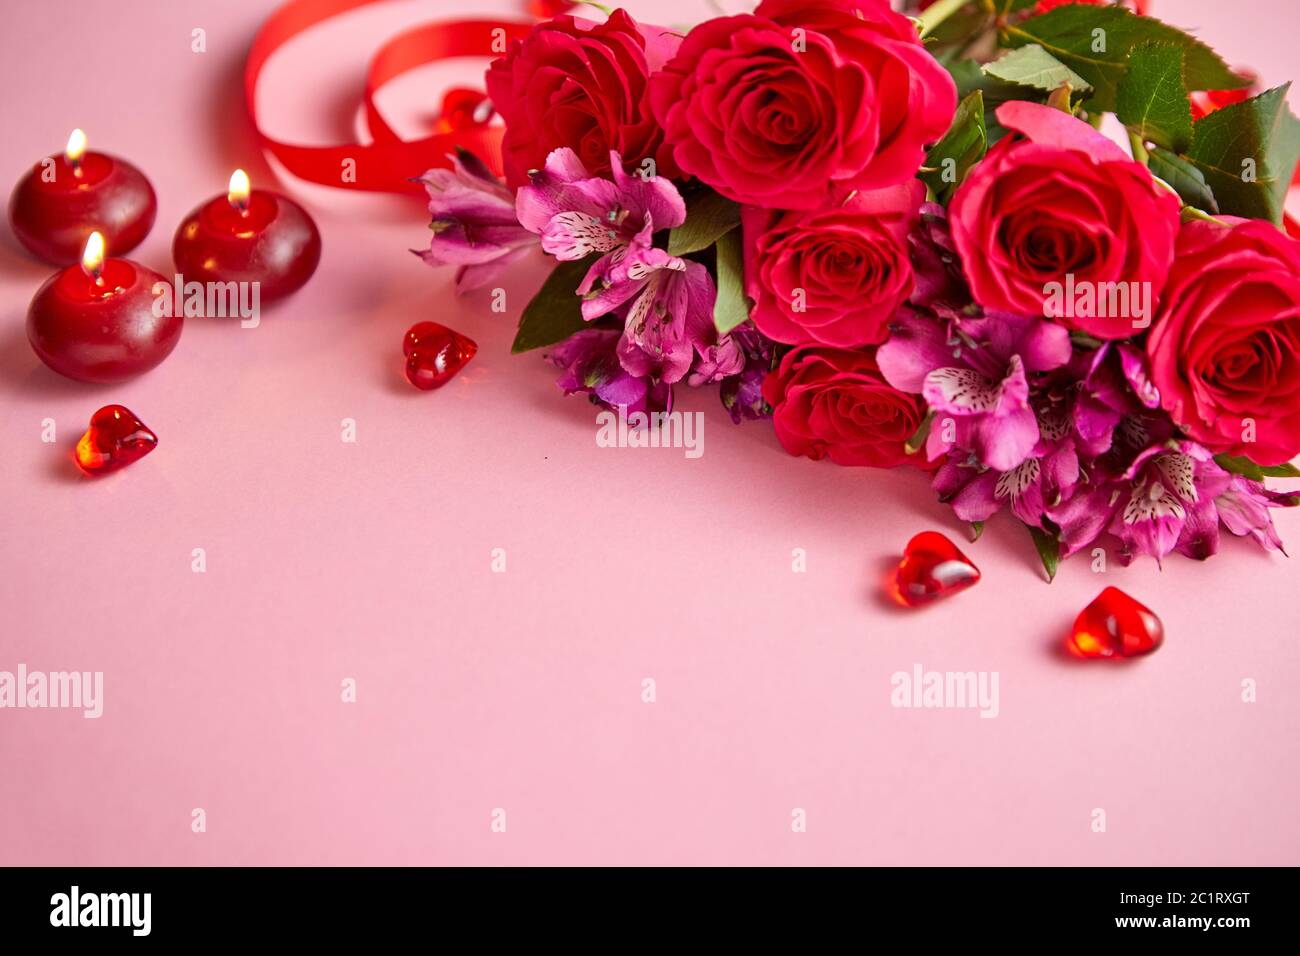 Fiori misti bouquet di rose, candele e a forma di cuore ad acido